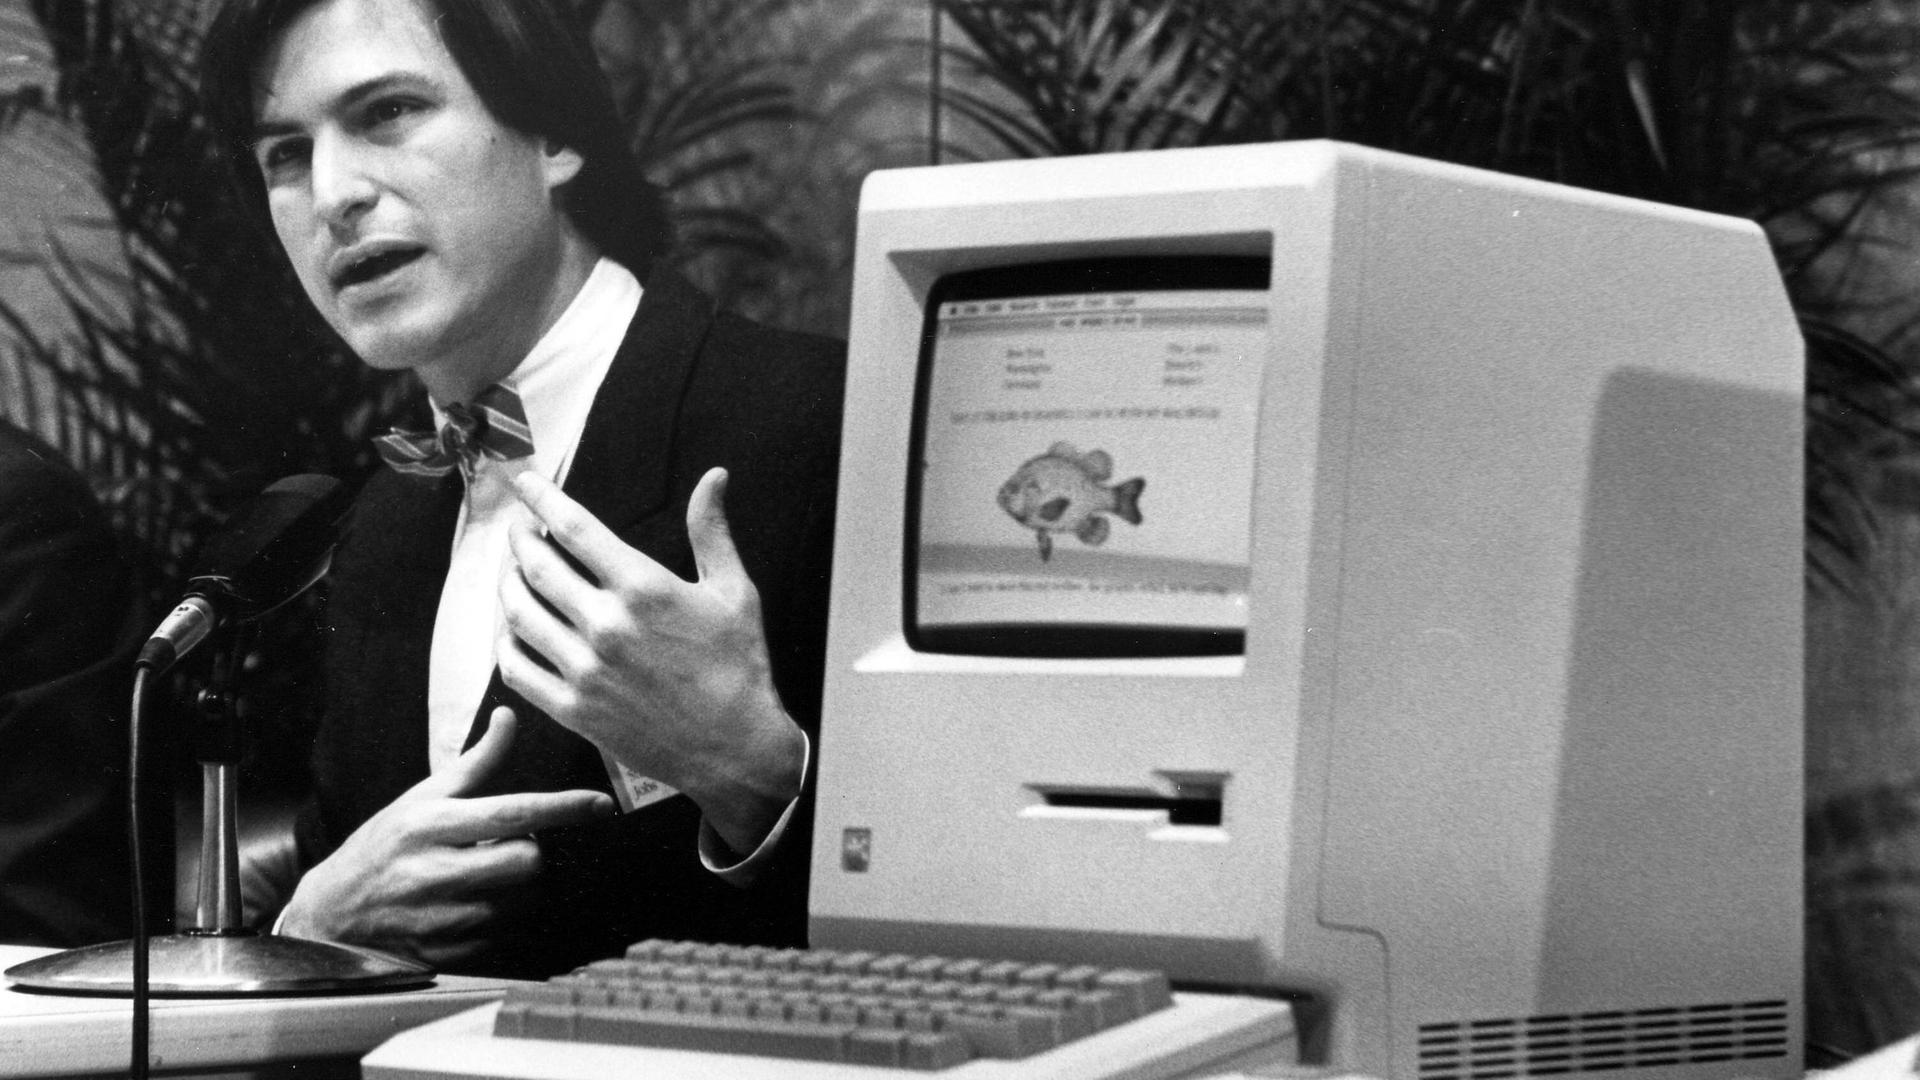 Steve Jobs präsentiert den  Macintosh-Computer.